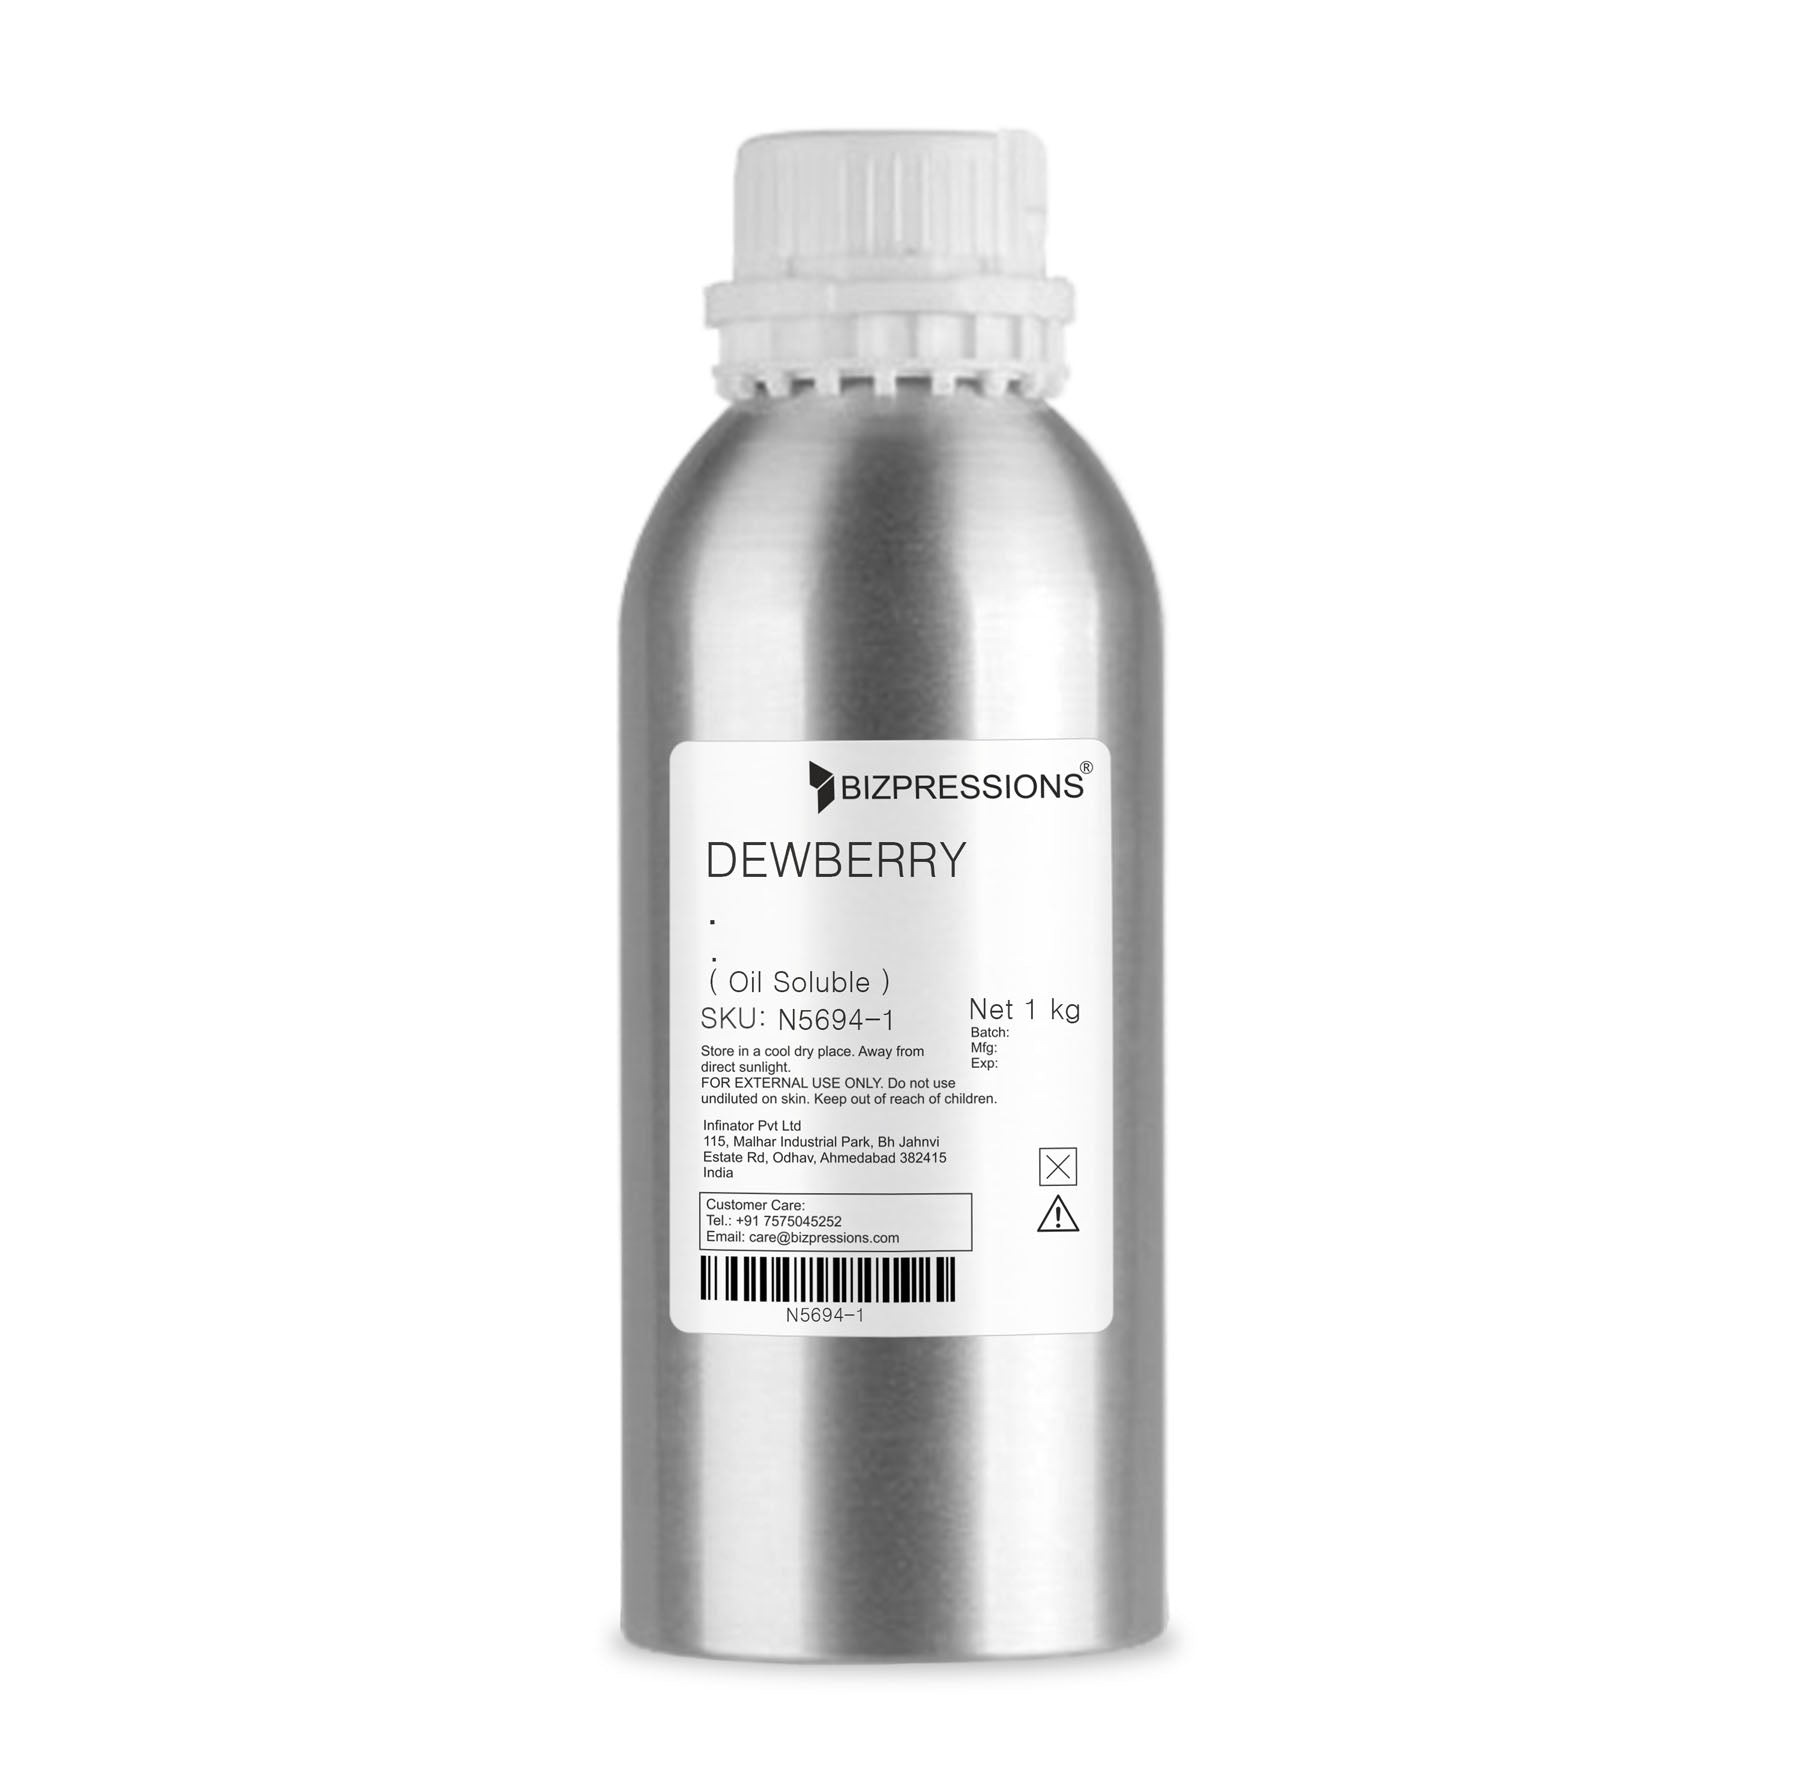 DEWBERRY - Fragrance ( Oil Soluble ) - 1 kg